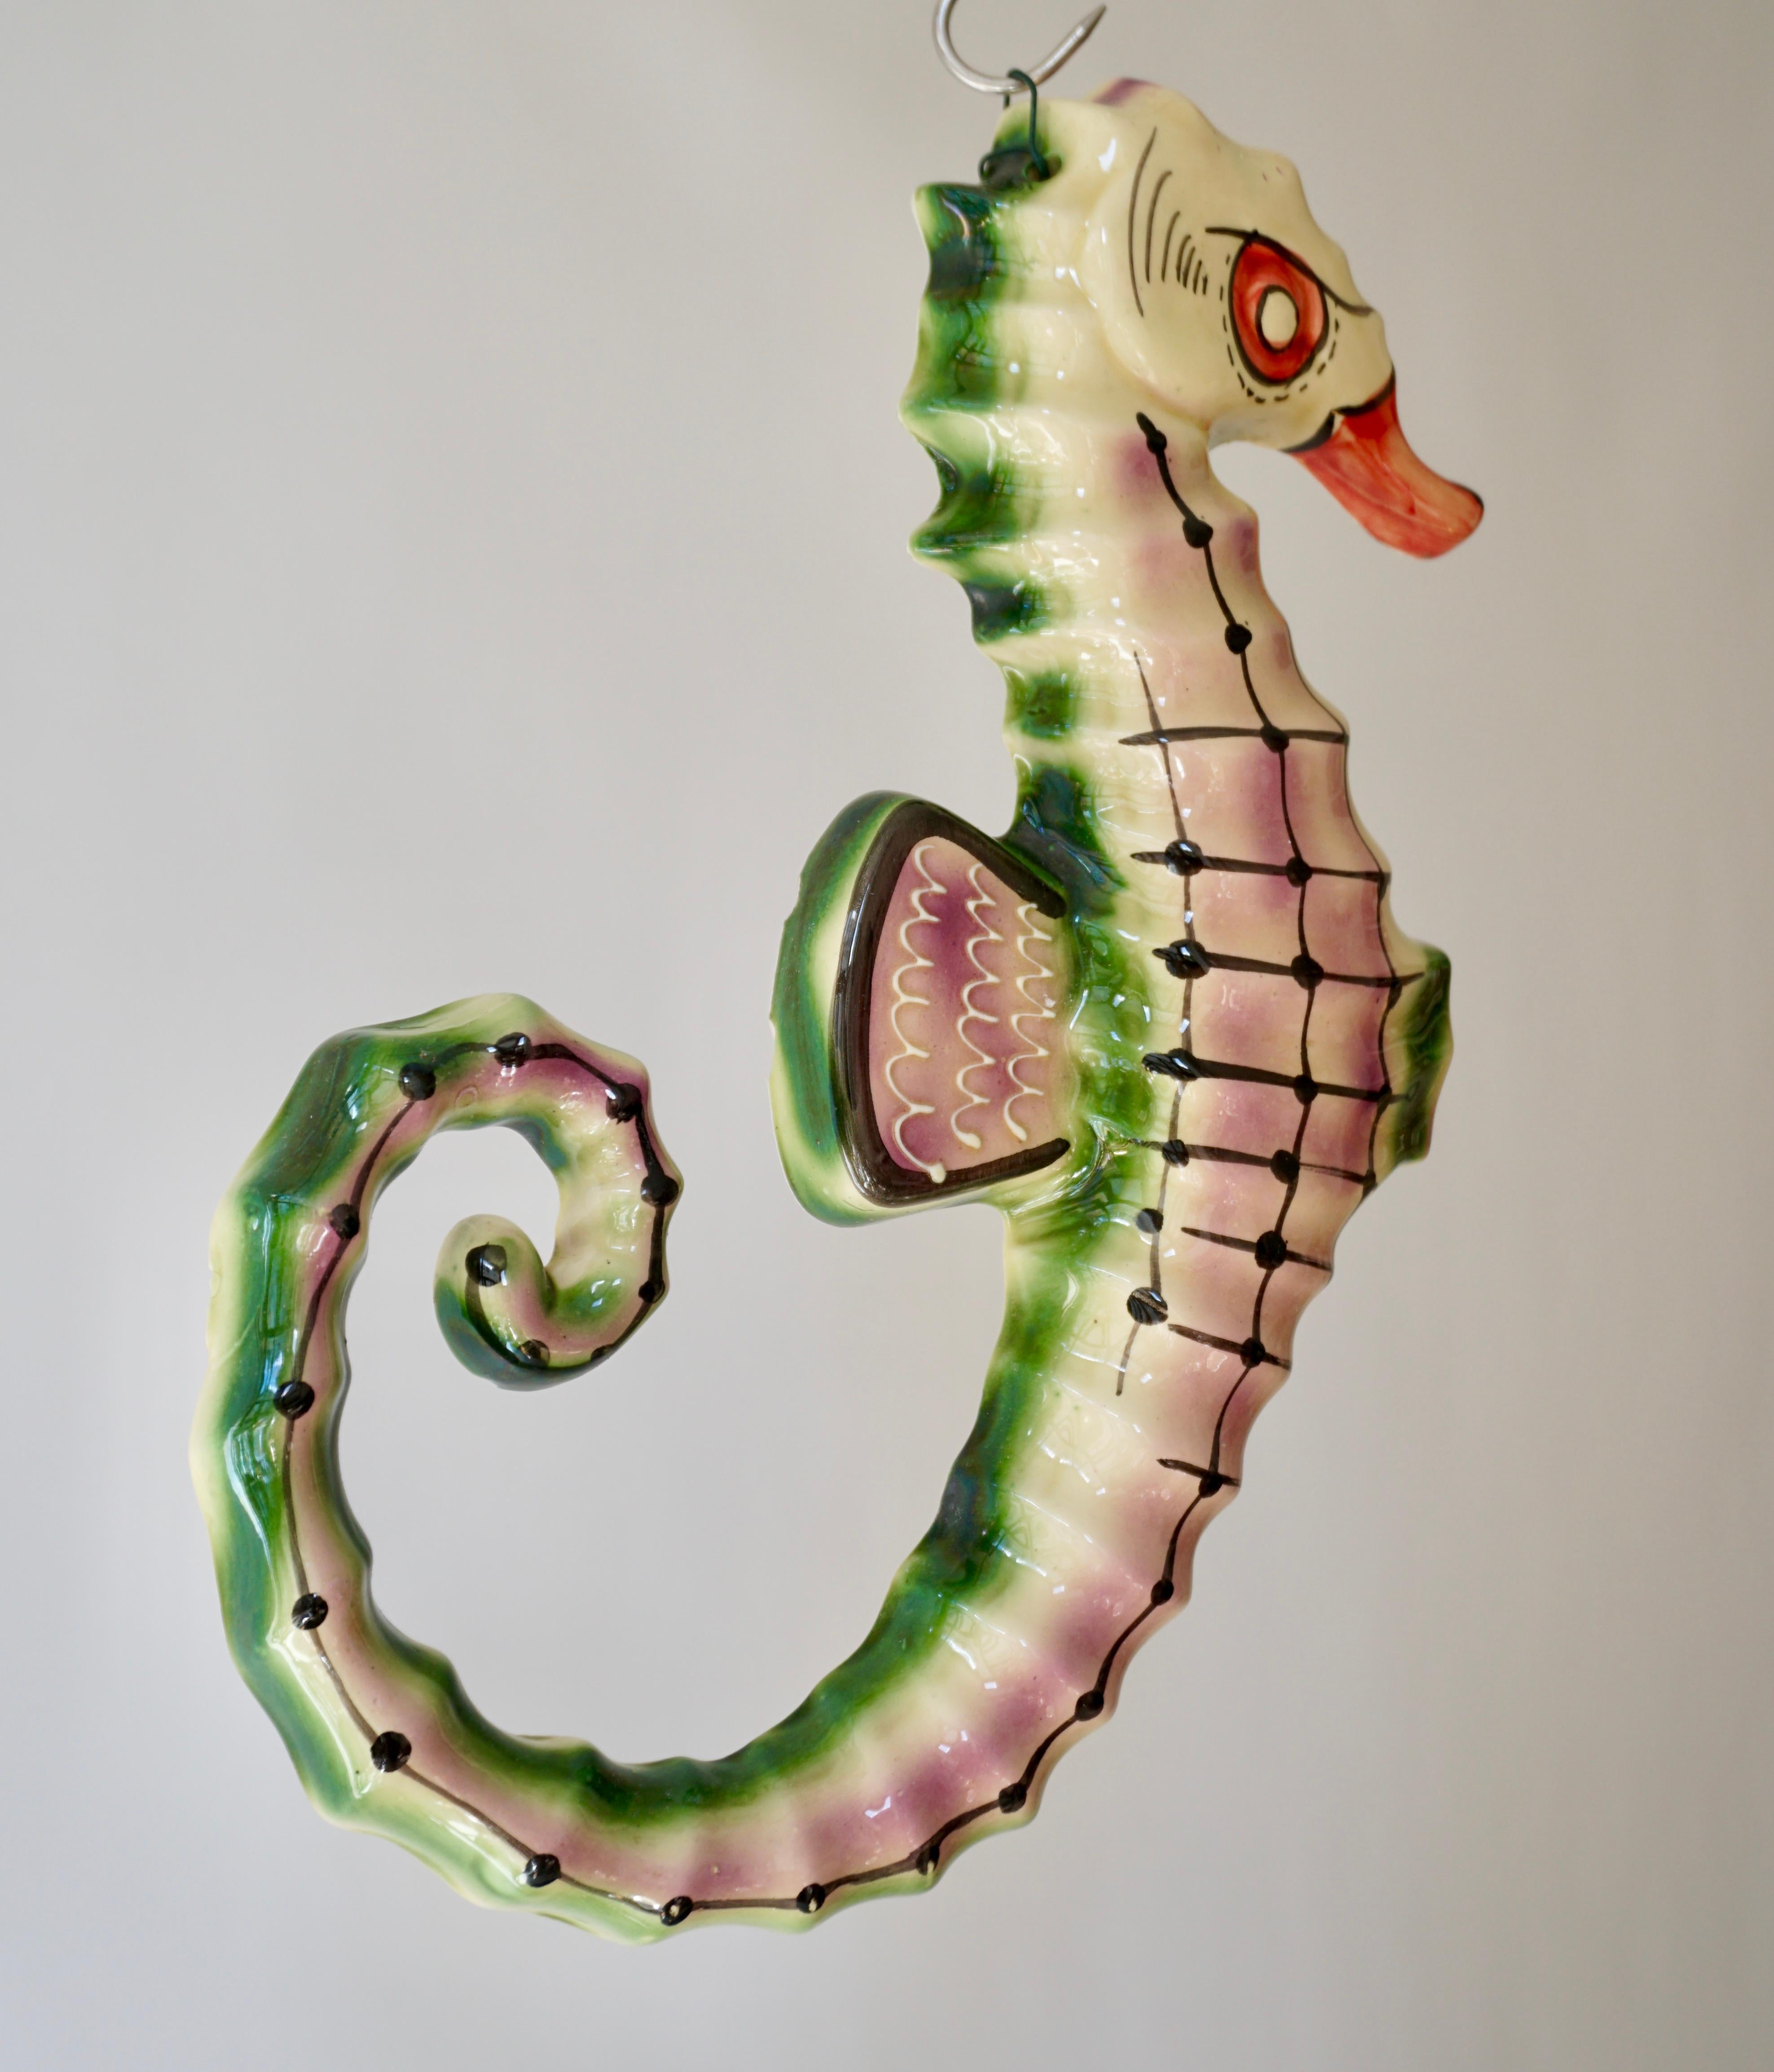 Italian multicolored glazed ceramic sea horse.
Measure: Height 40 cm - 15.7 inch.